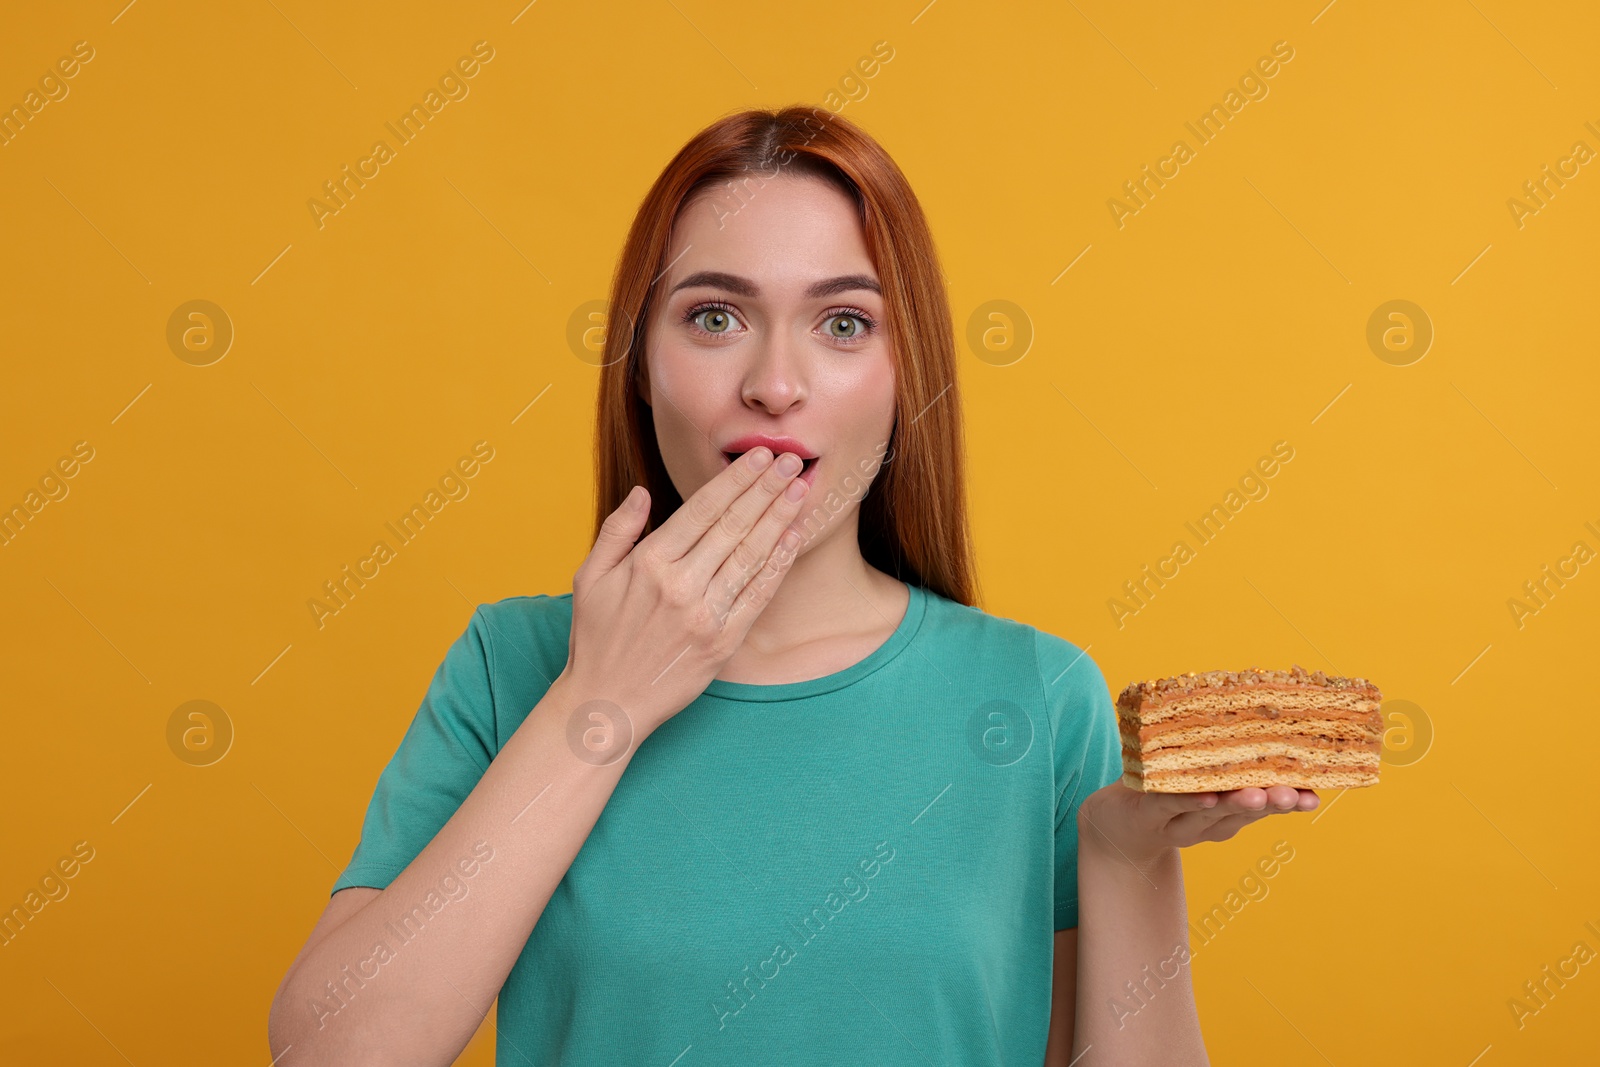 Photo of Emotional young woman eating piece of tasty cake on orange background